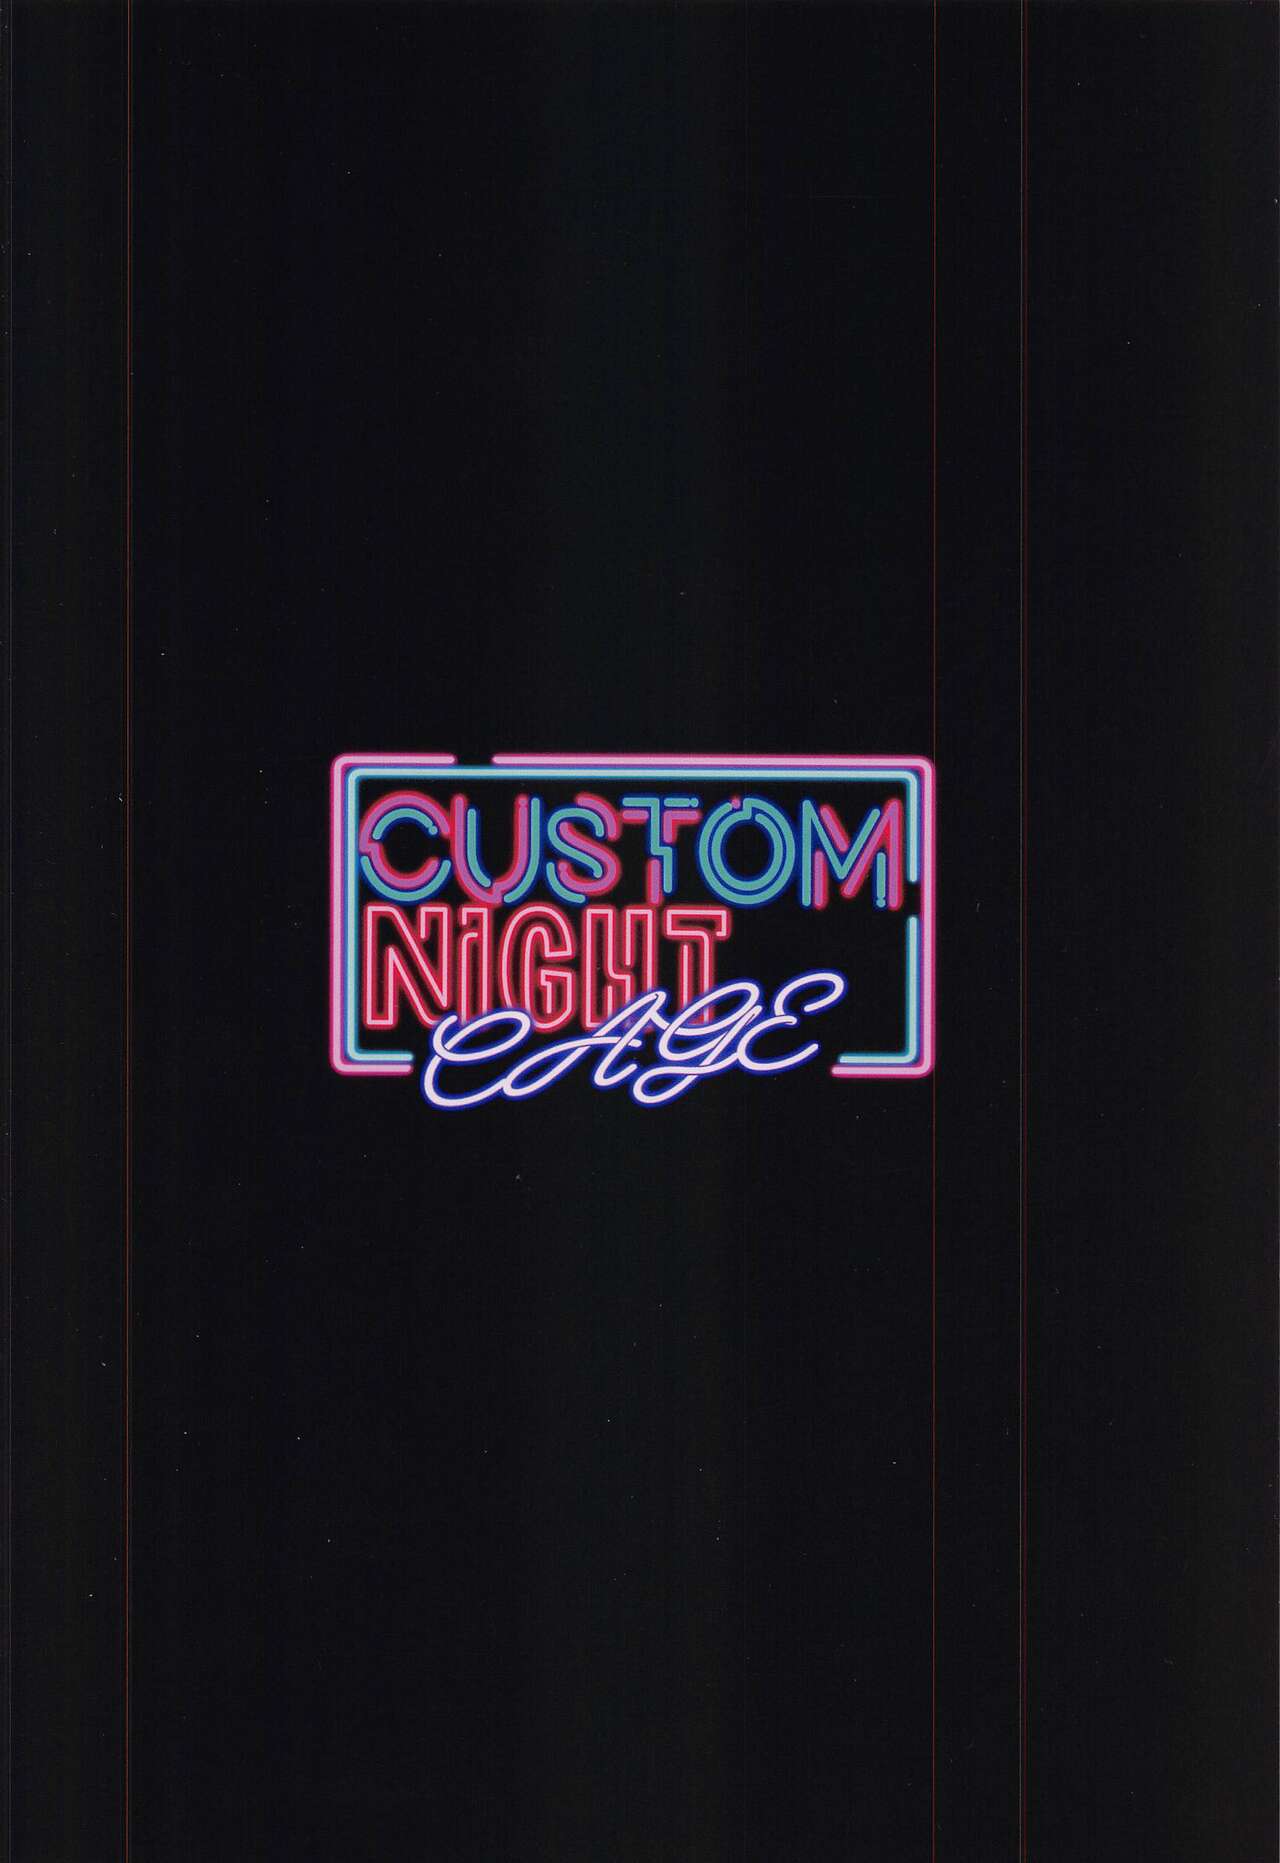 Custom night cage